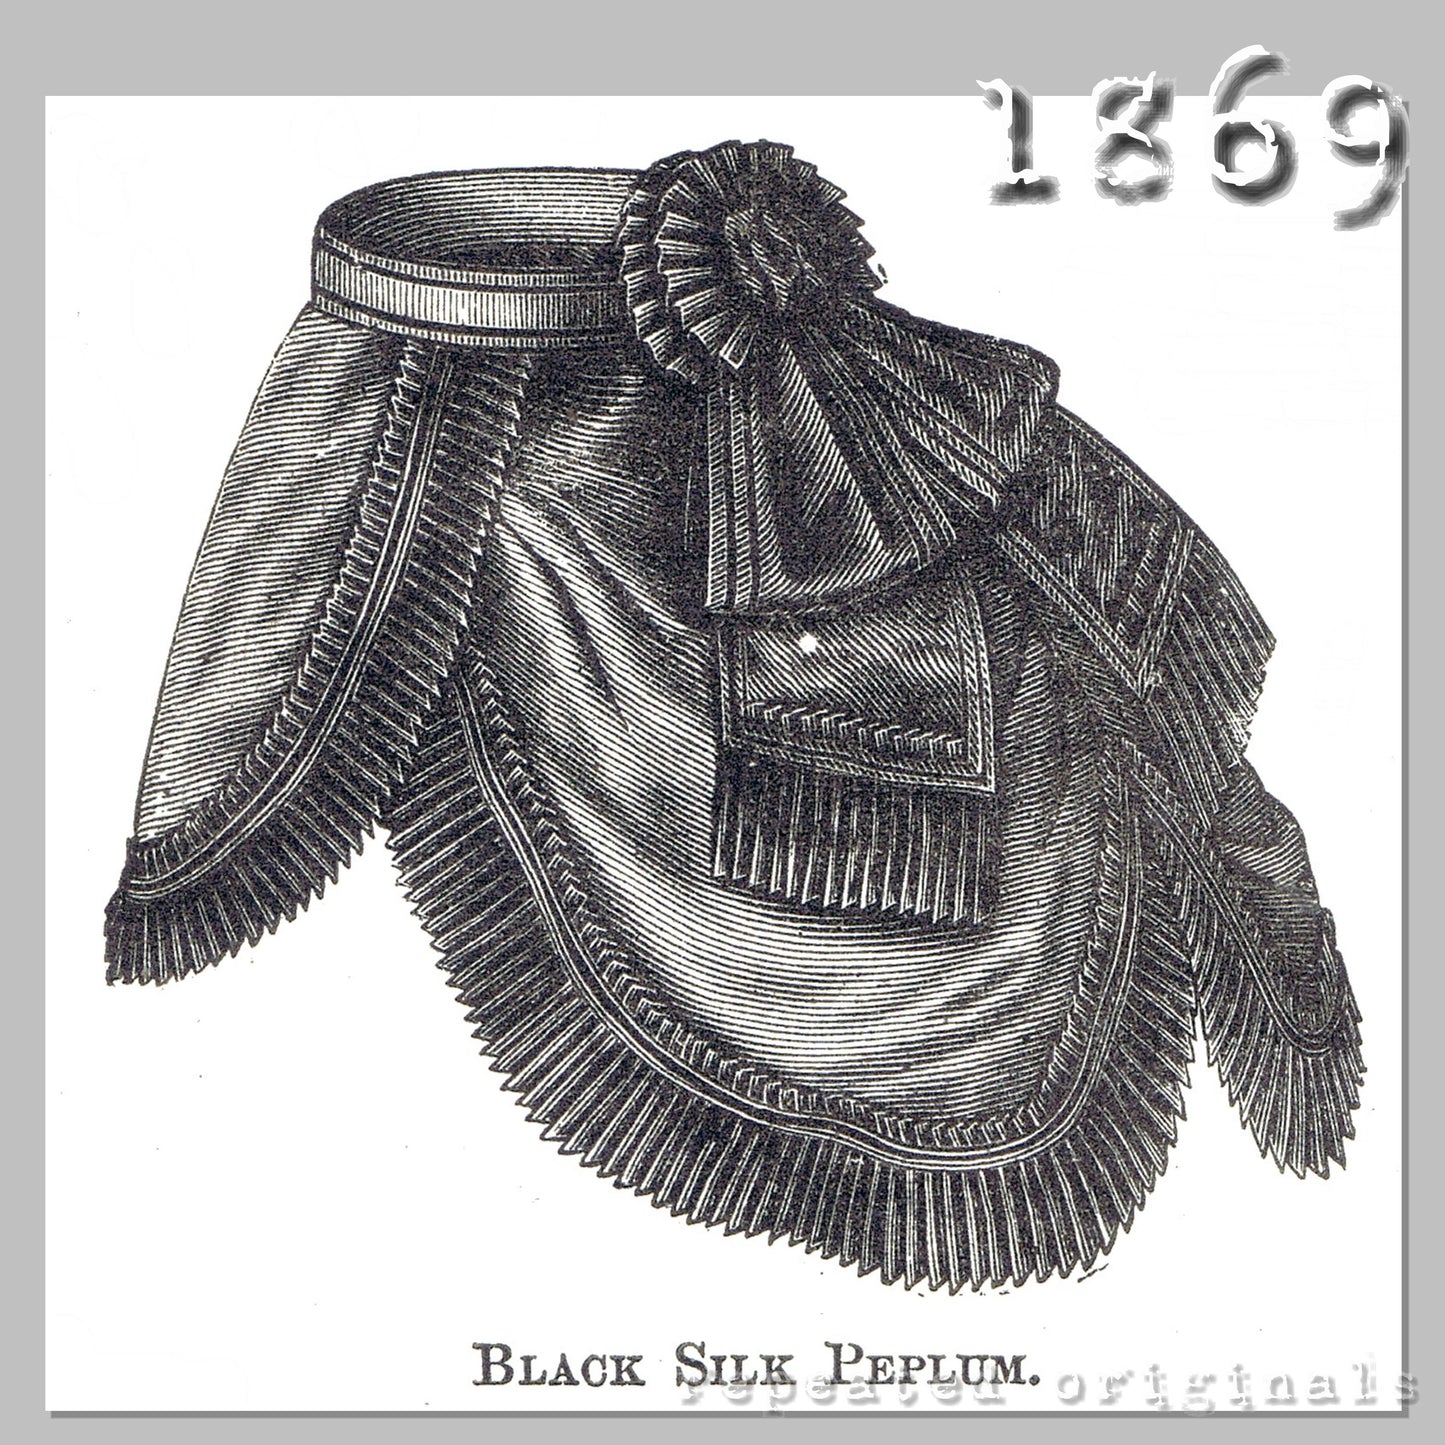 1869 Black Silk Peplum Sewing Pattern - INSTANT DOWNLOAD PDF